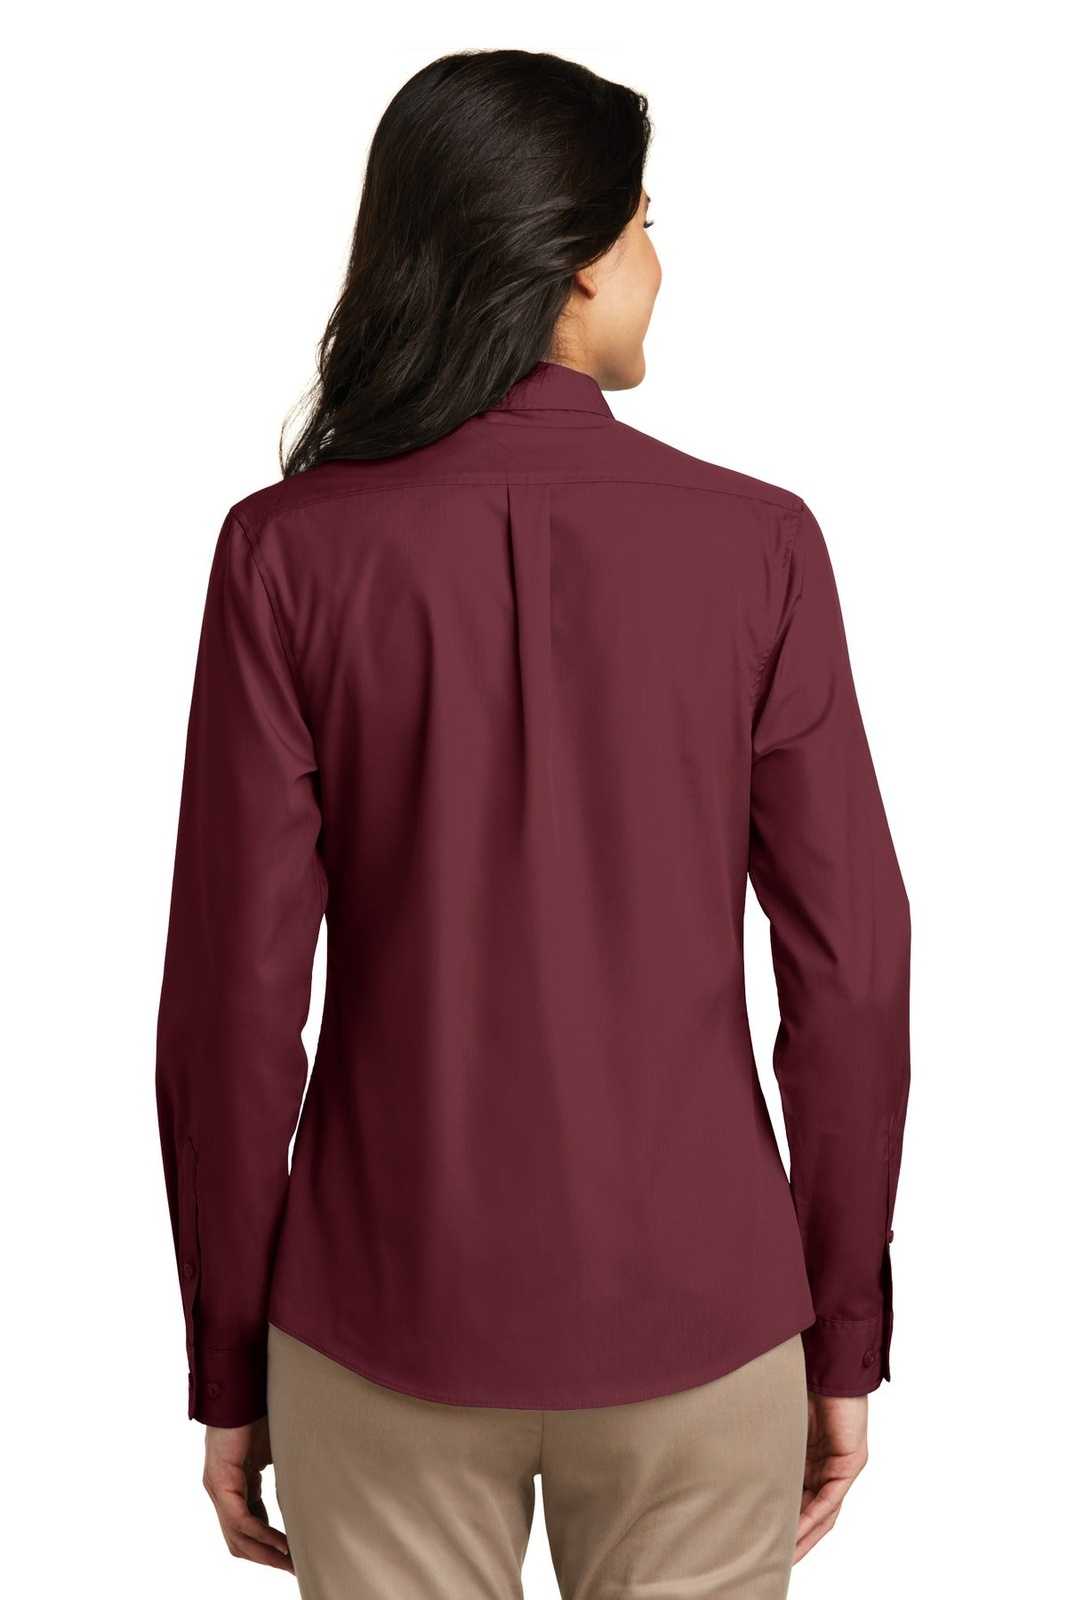 Port Authority LW100 Ladies Long Sleeve Carefree Poplin Shirt - Burgundy - HIT a Double - 2